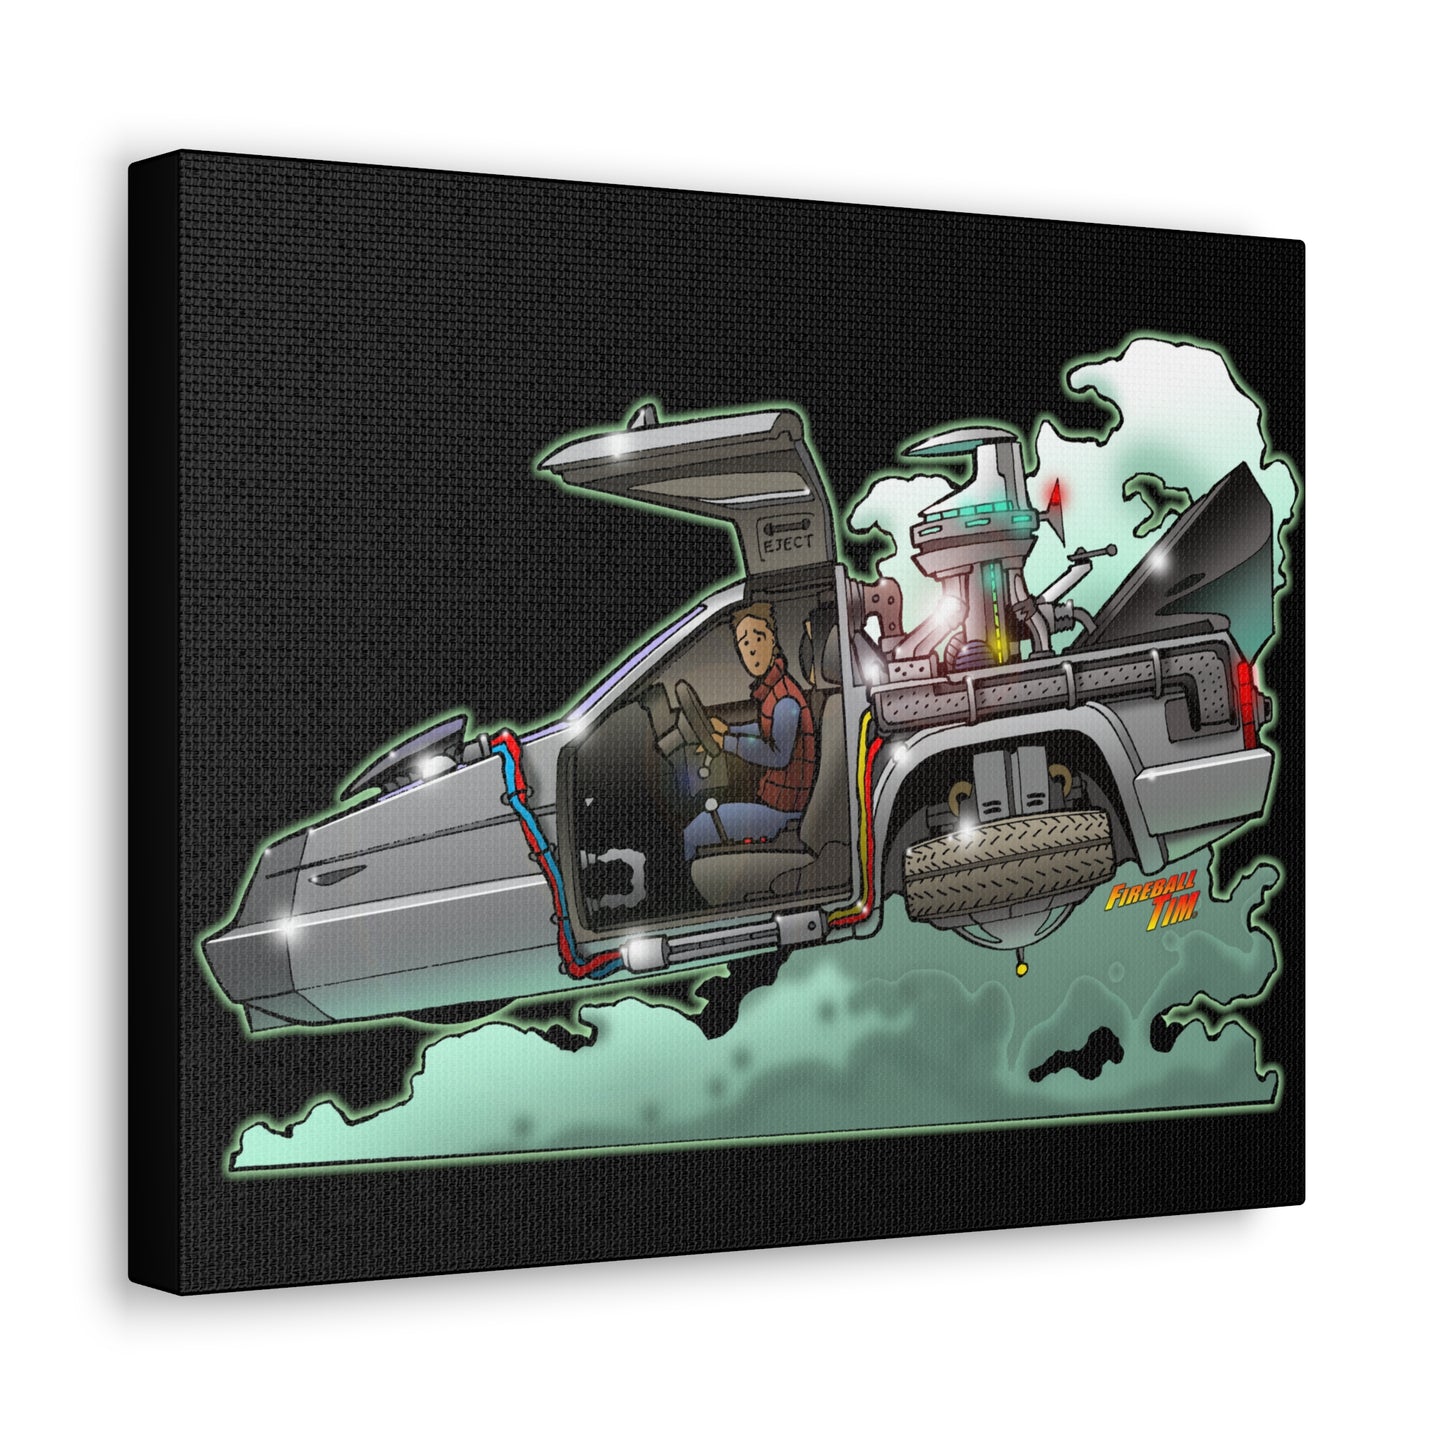 Back to the Future DELOREAN DMC 21 Time Machine Movie Car Canvas Gallery Art Print 11x14